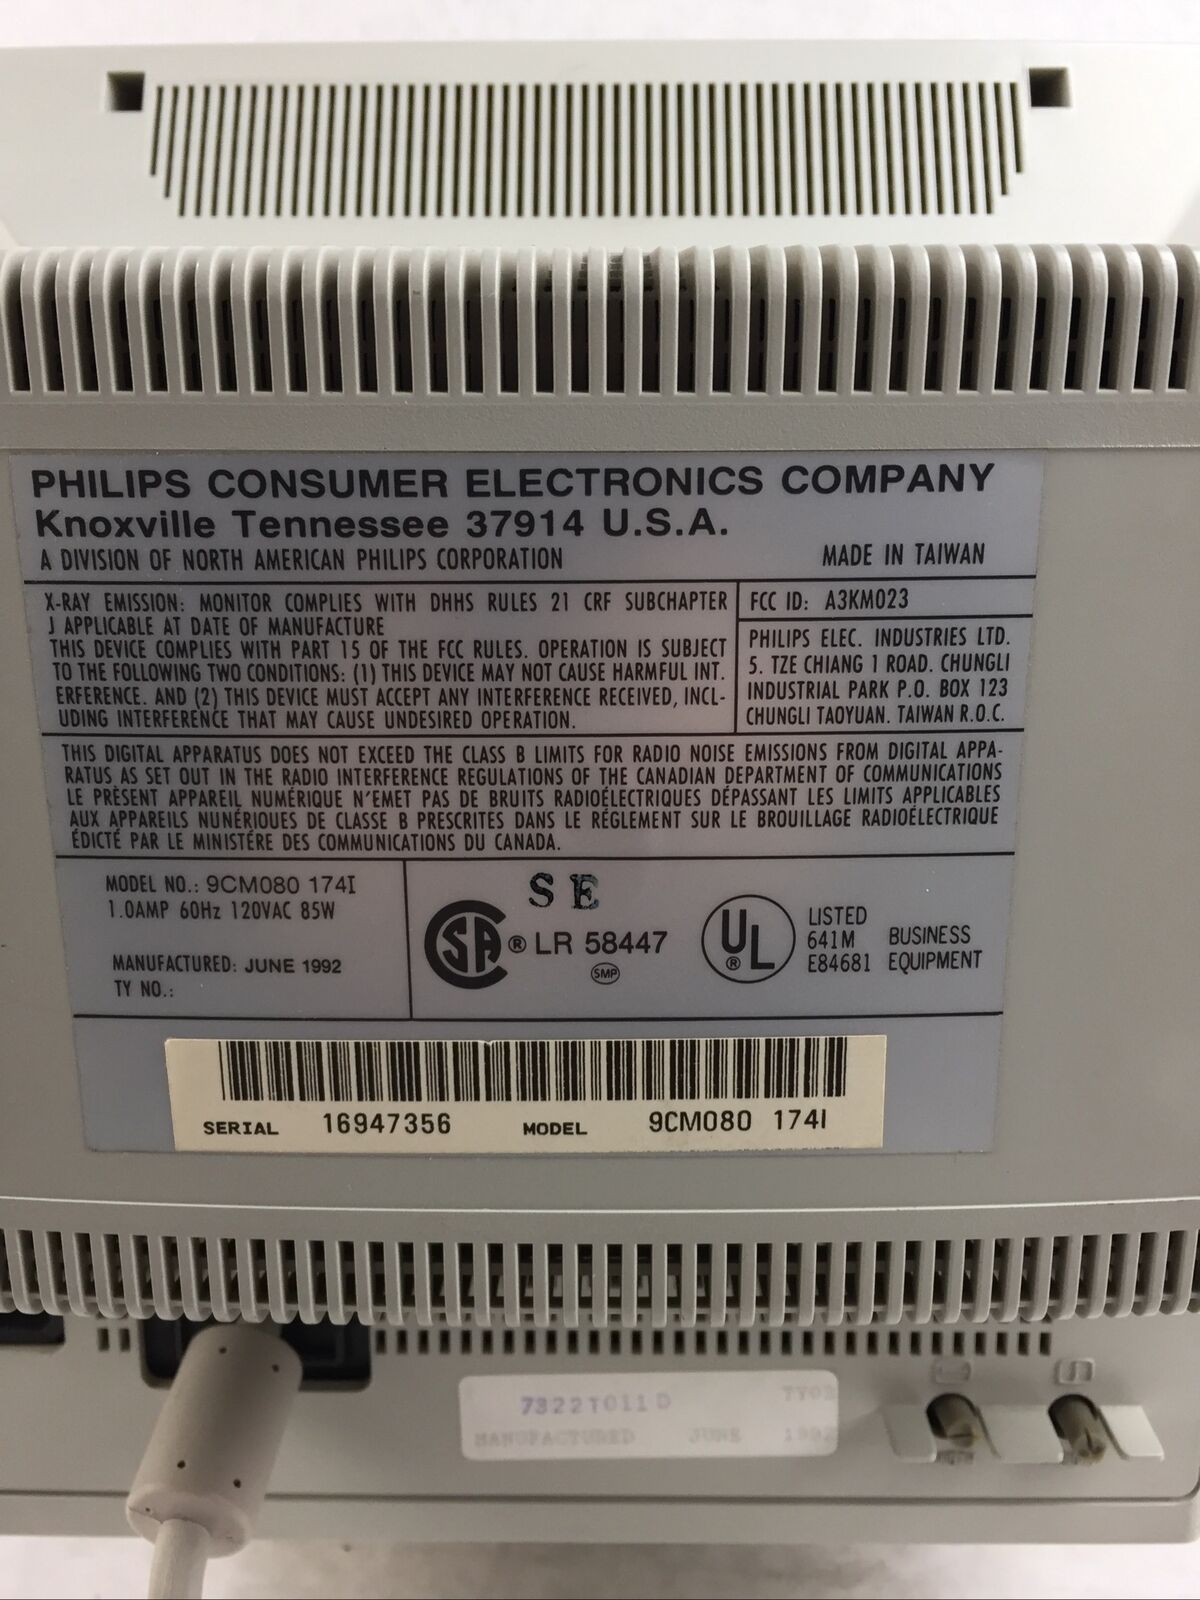 Philips Consumer Electronics Company Magnavox Professional Mac Color Display 9CM